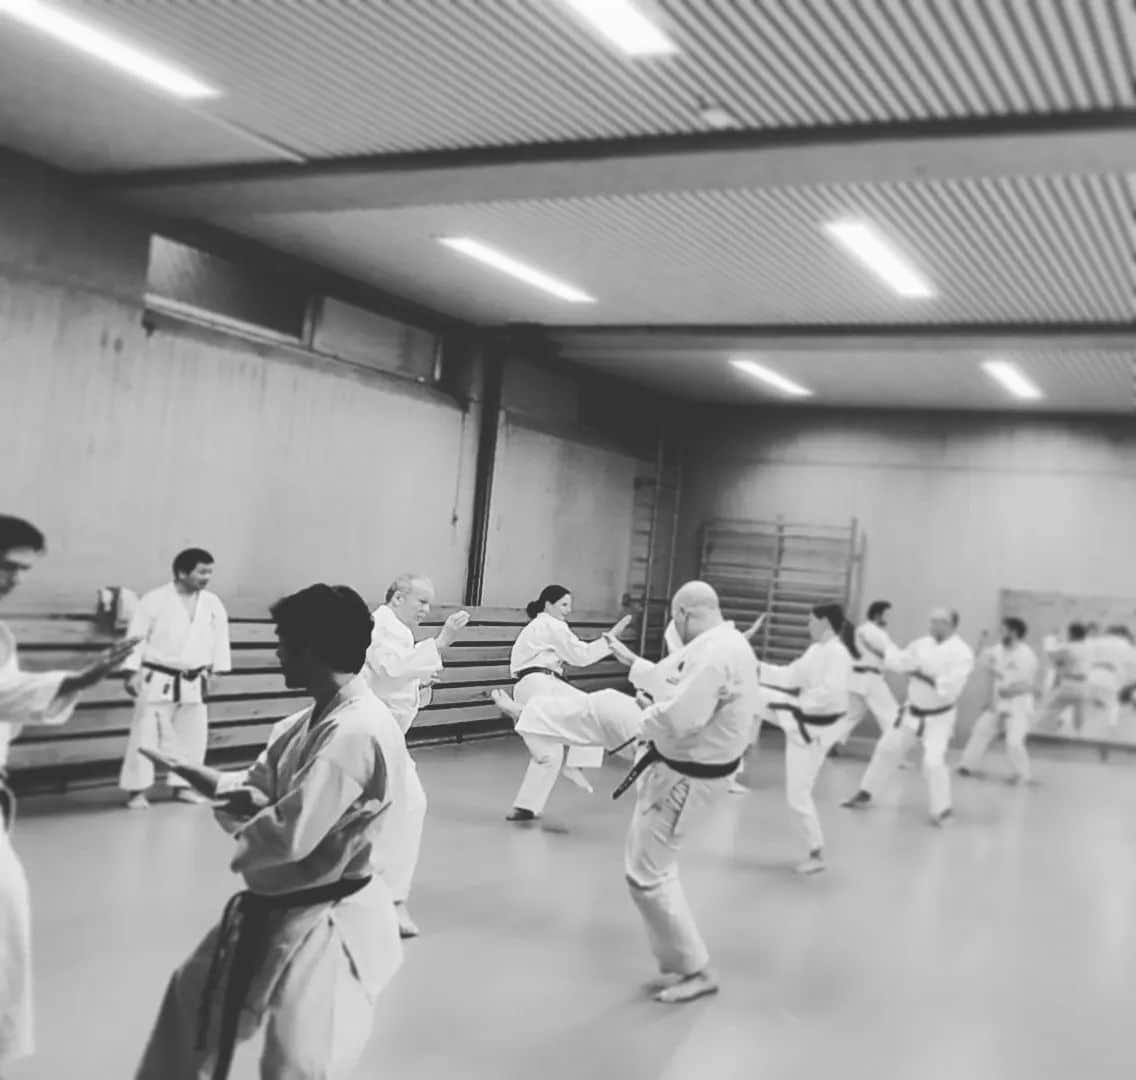 Training im Dojo Yamato Düsseldorf e.V.🥋
Trainer Keigo Shimizu 🇯🇵